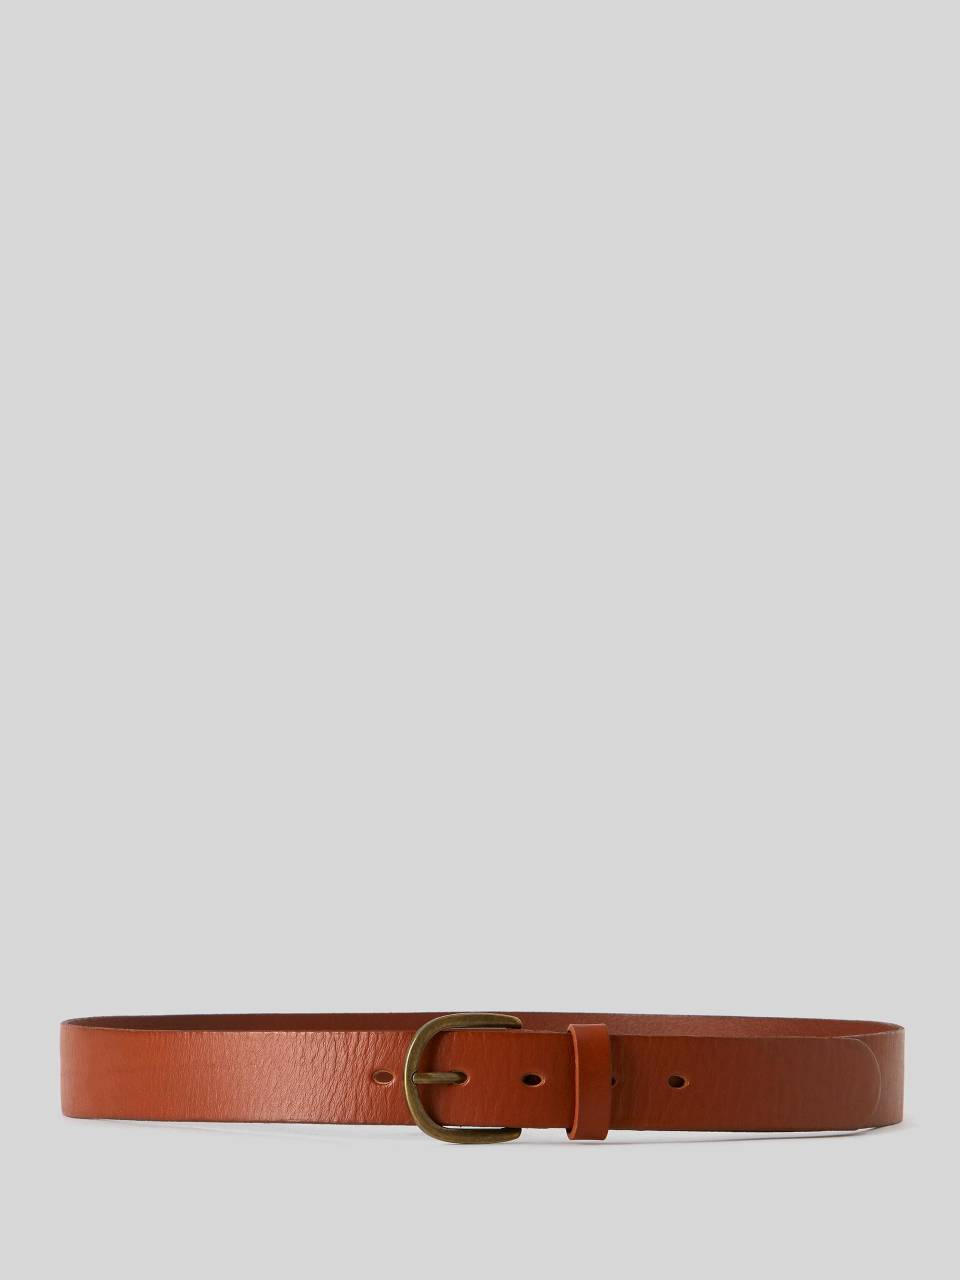 Benetton Genuine leather belt. 1